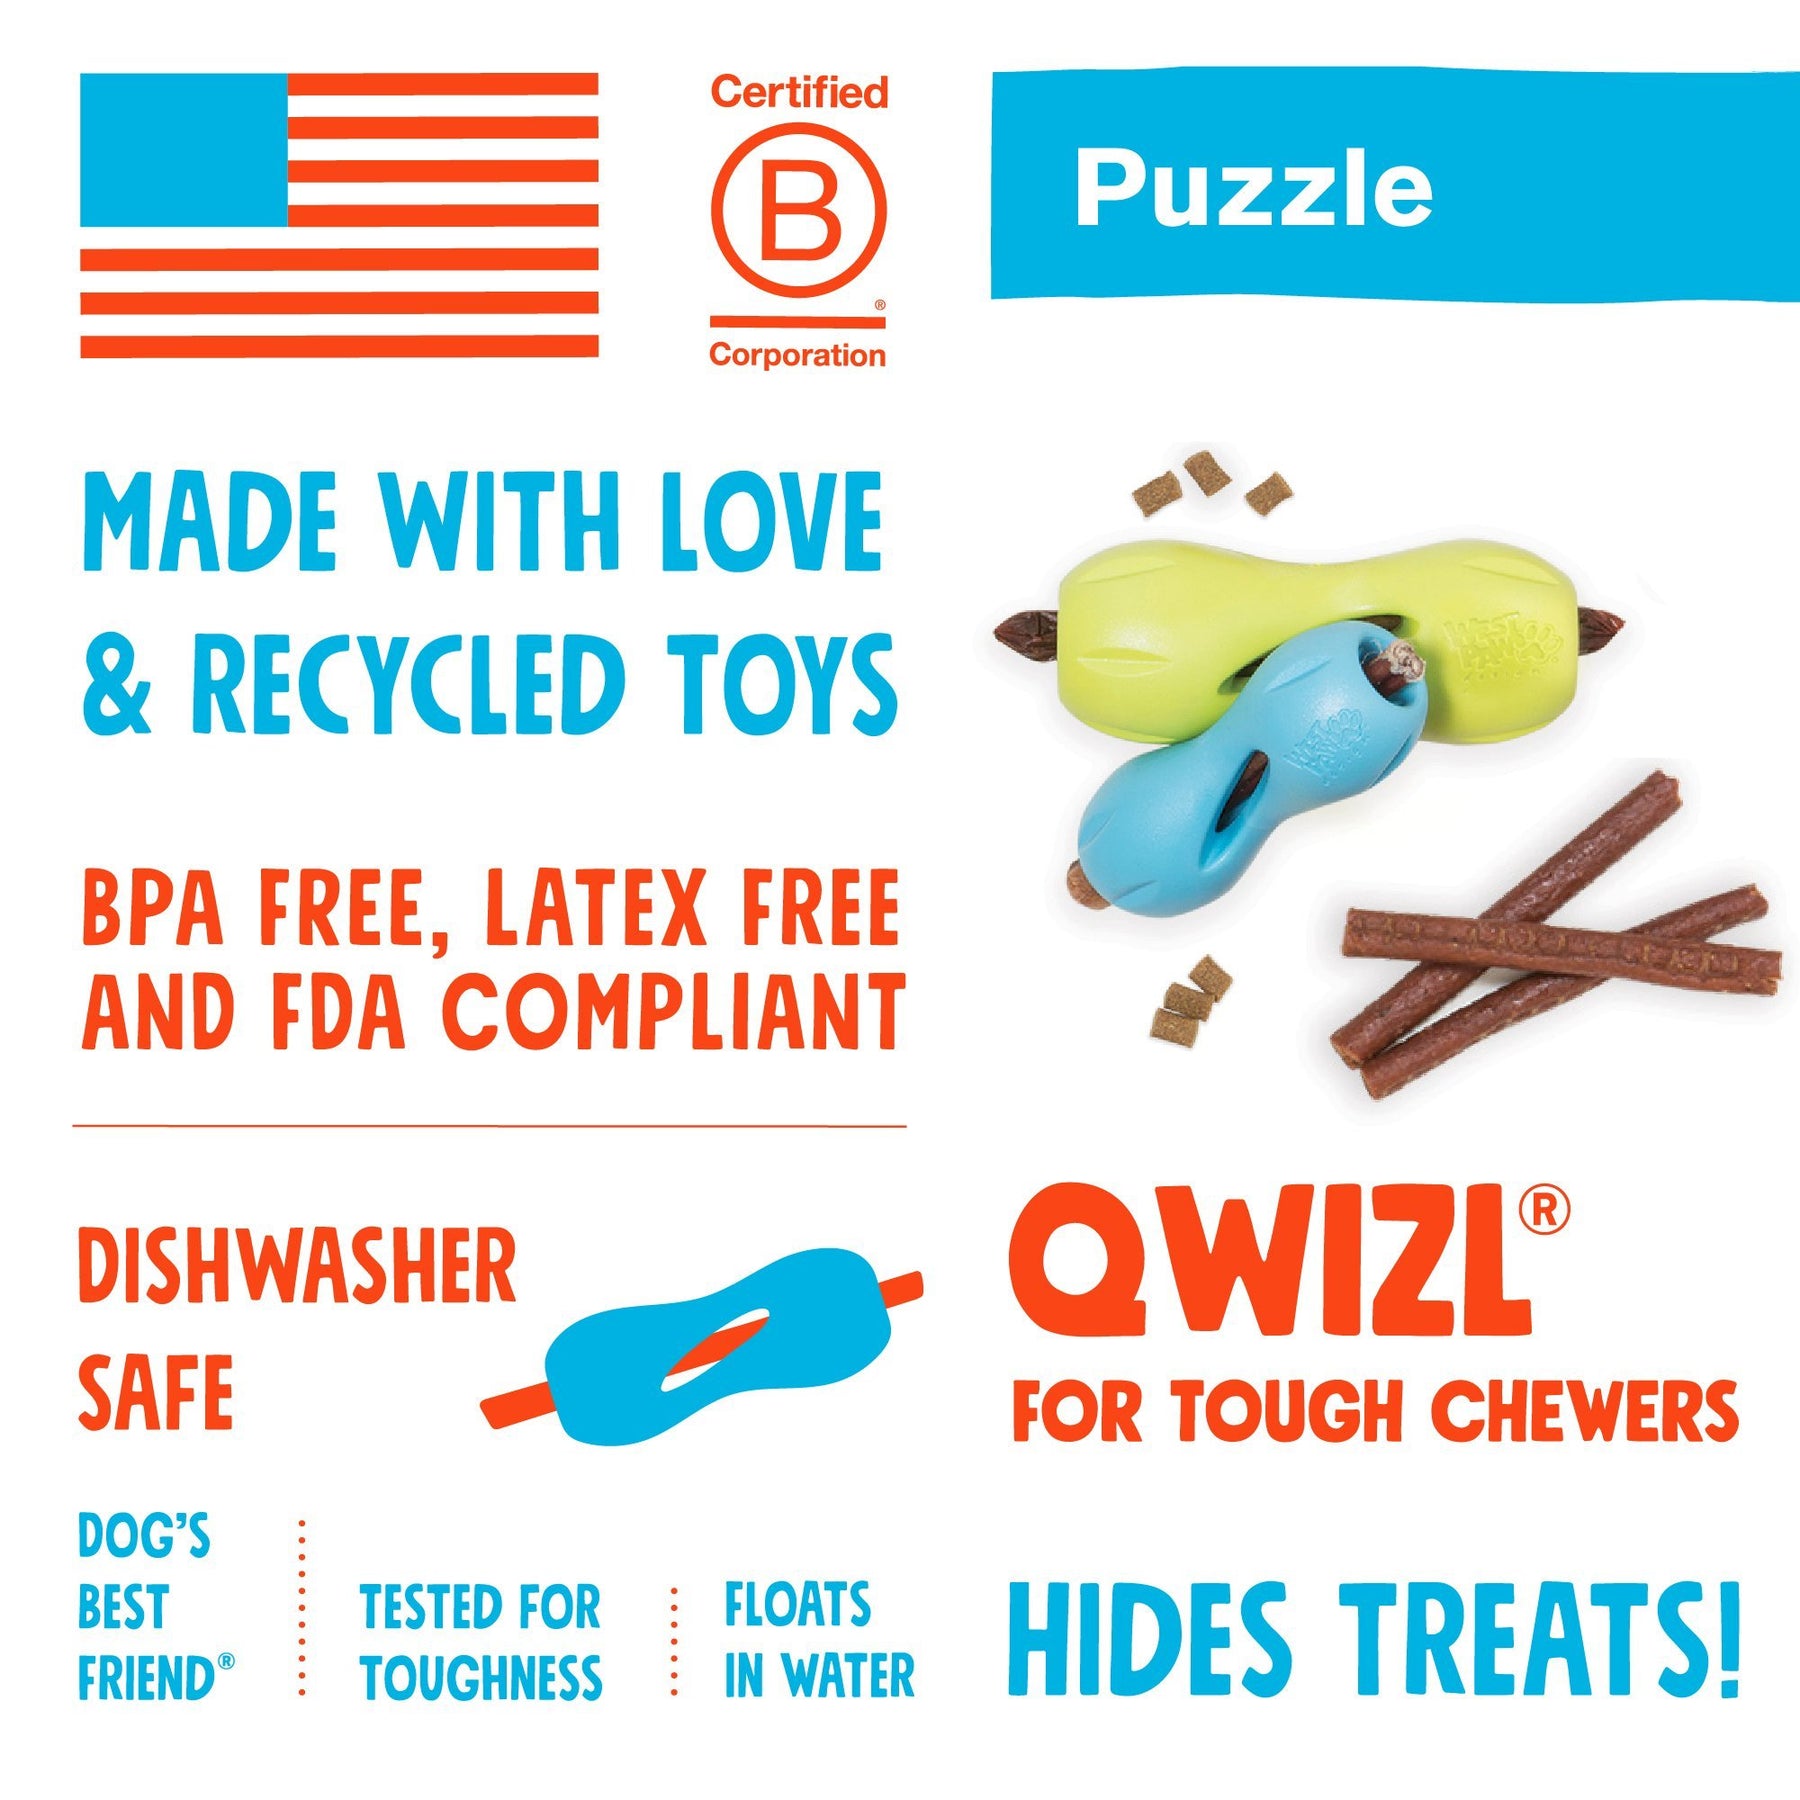 Qwizl Treat Dog Toy l West Paw Design - Olive